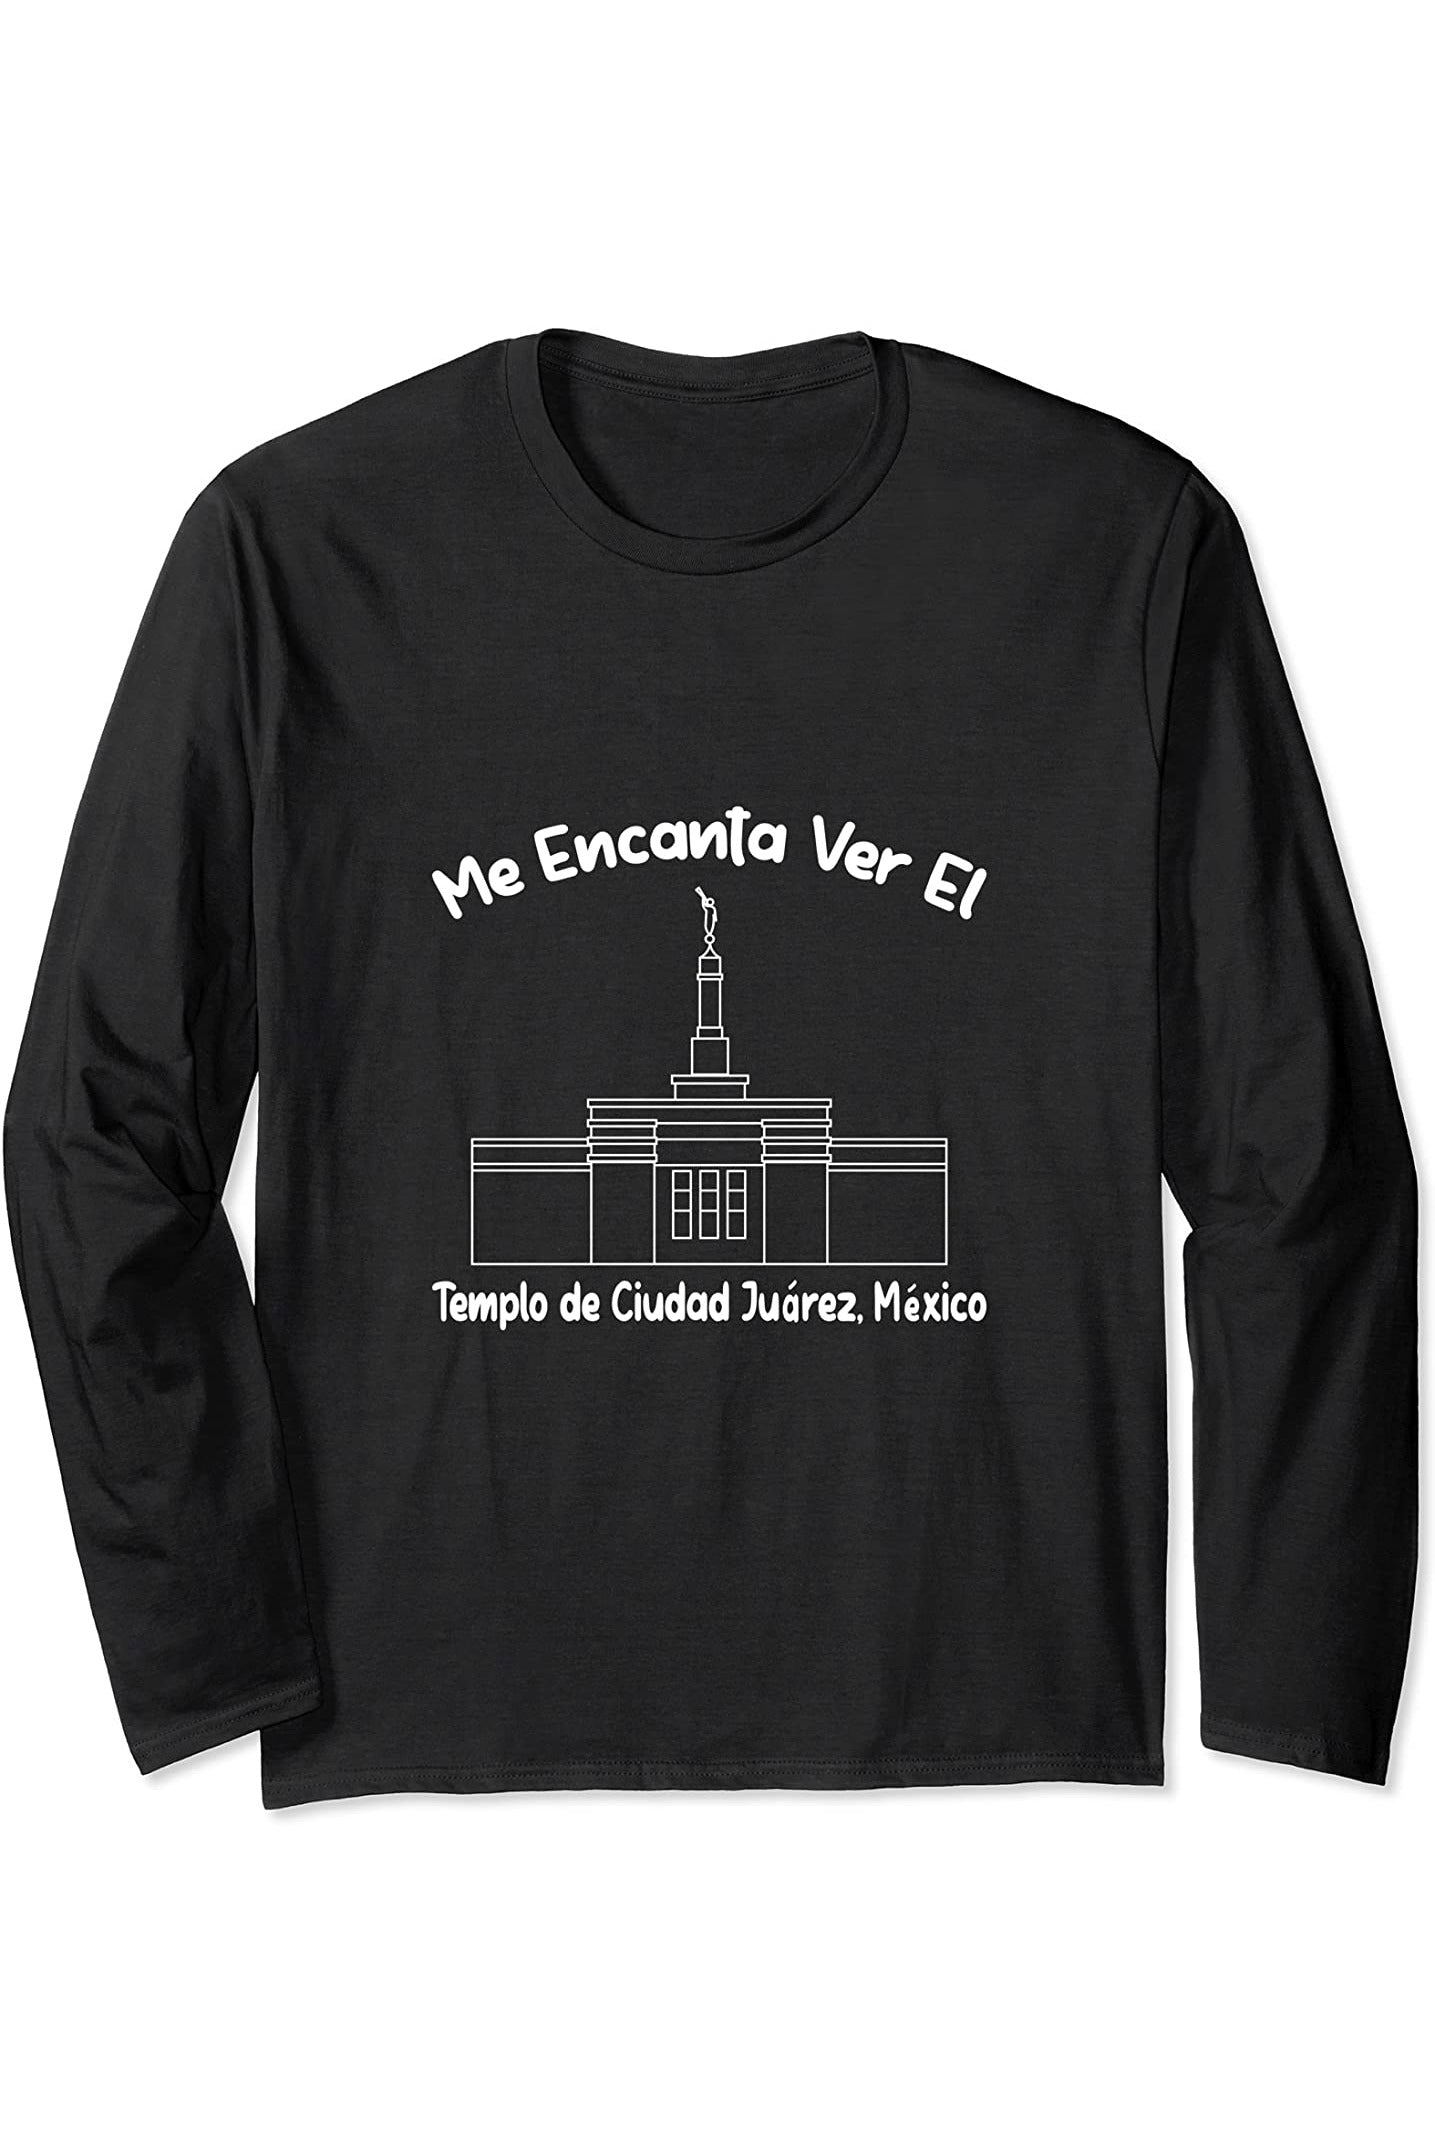 Ciudad Juarez Mexico Temple Long Sleeve T-Shirt - Primary Style (Spanish) US